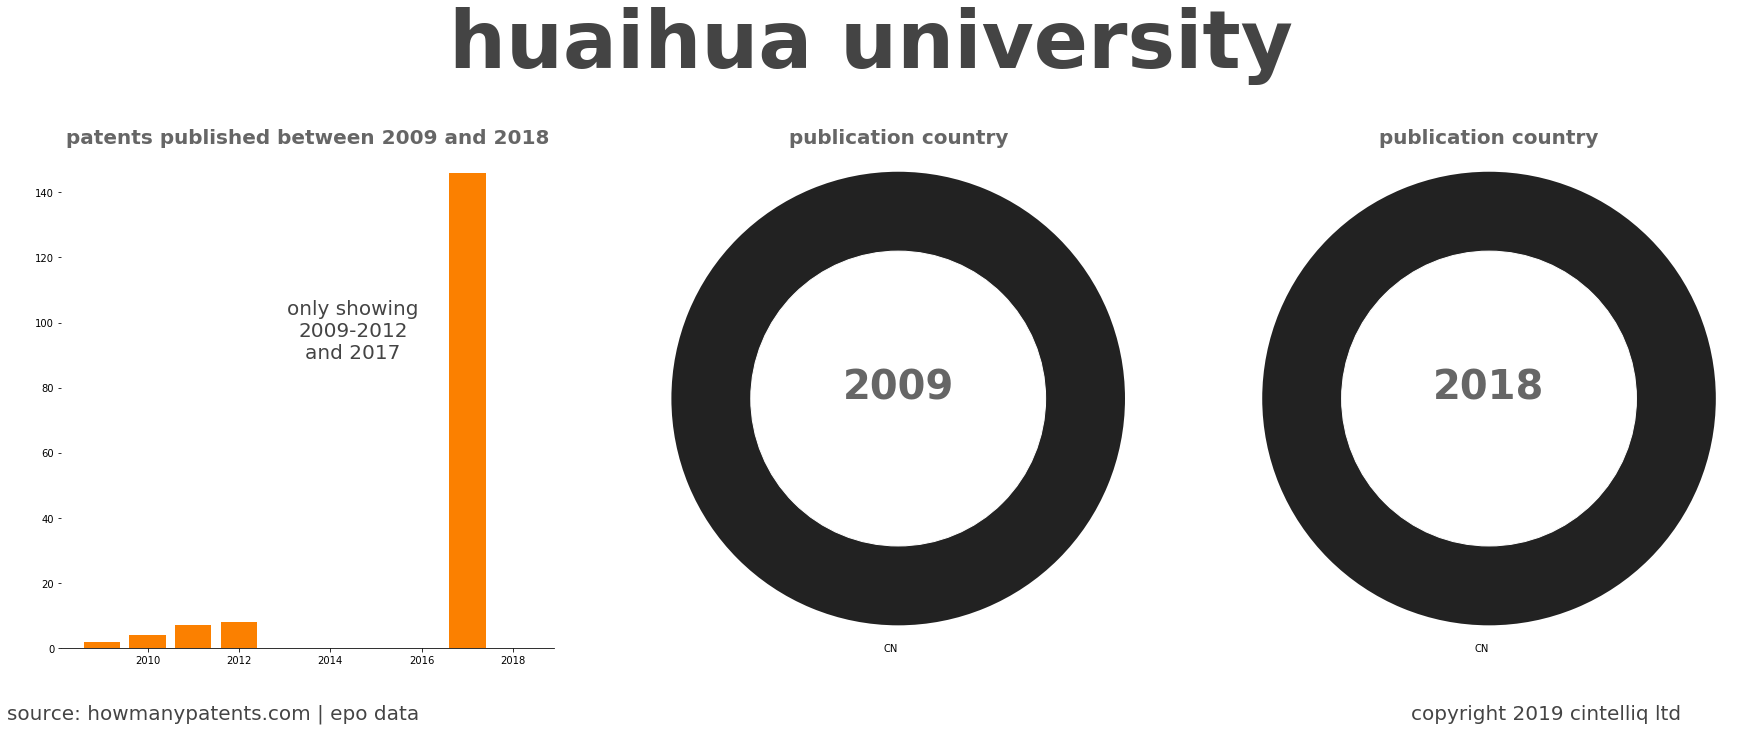 summary of patents for Huaihua University